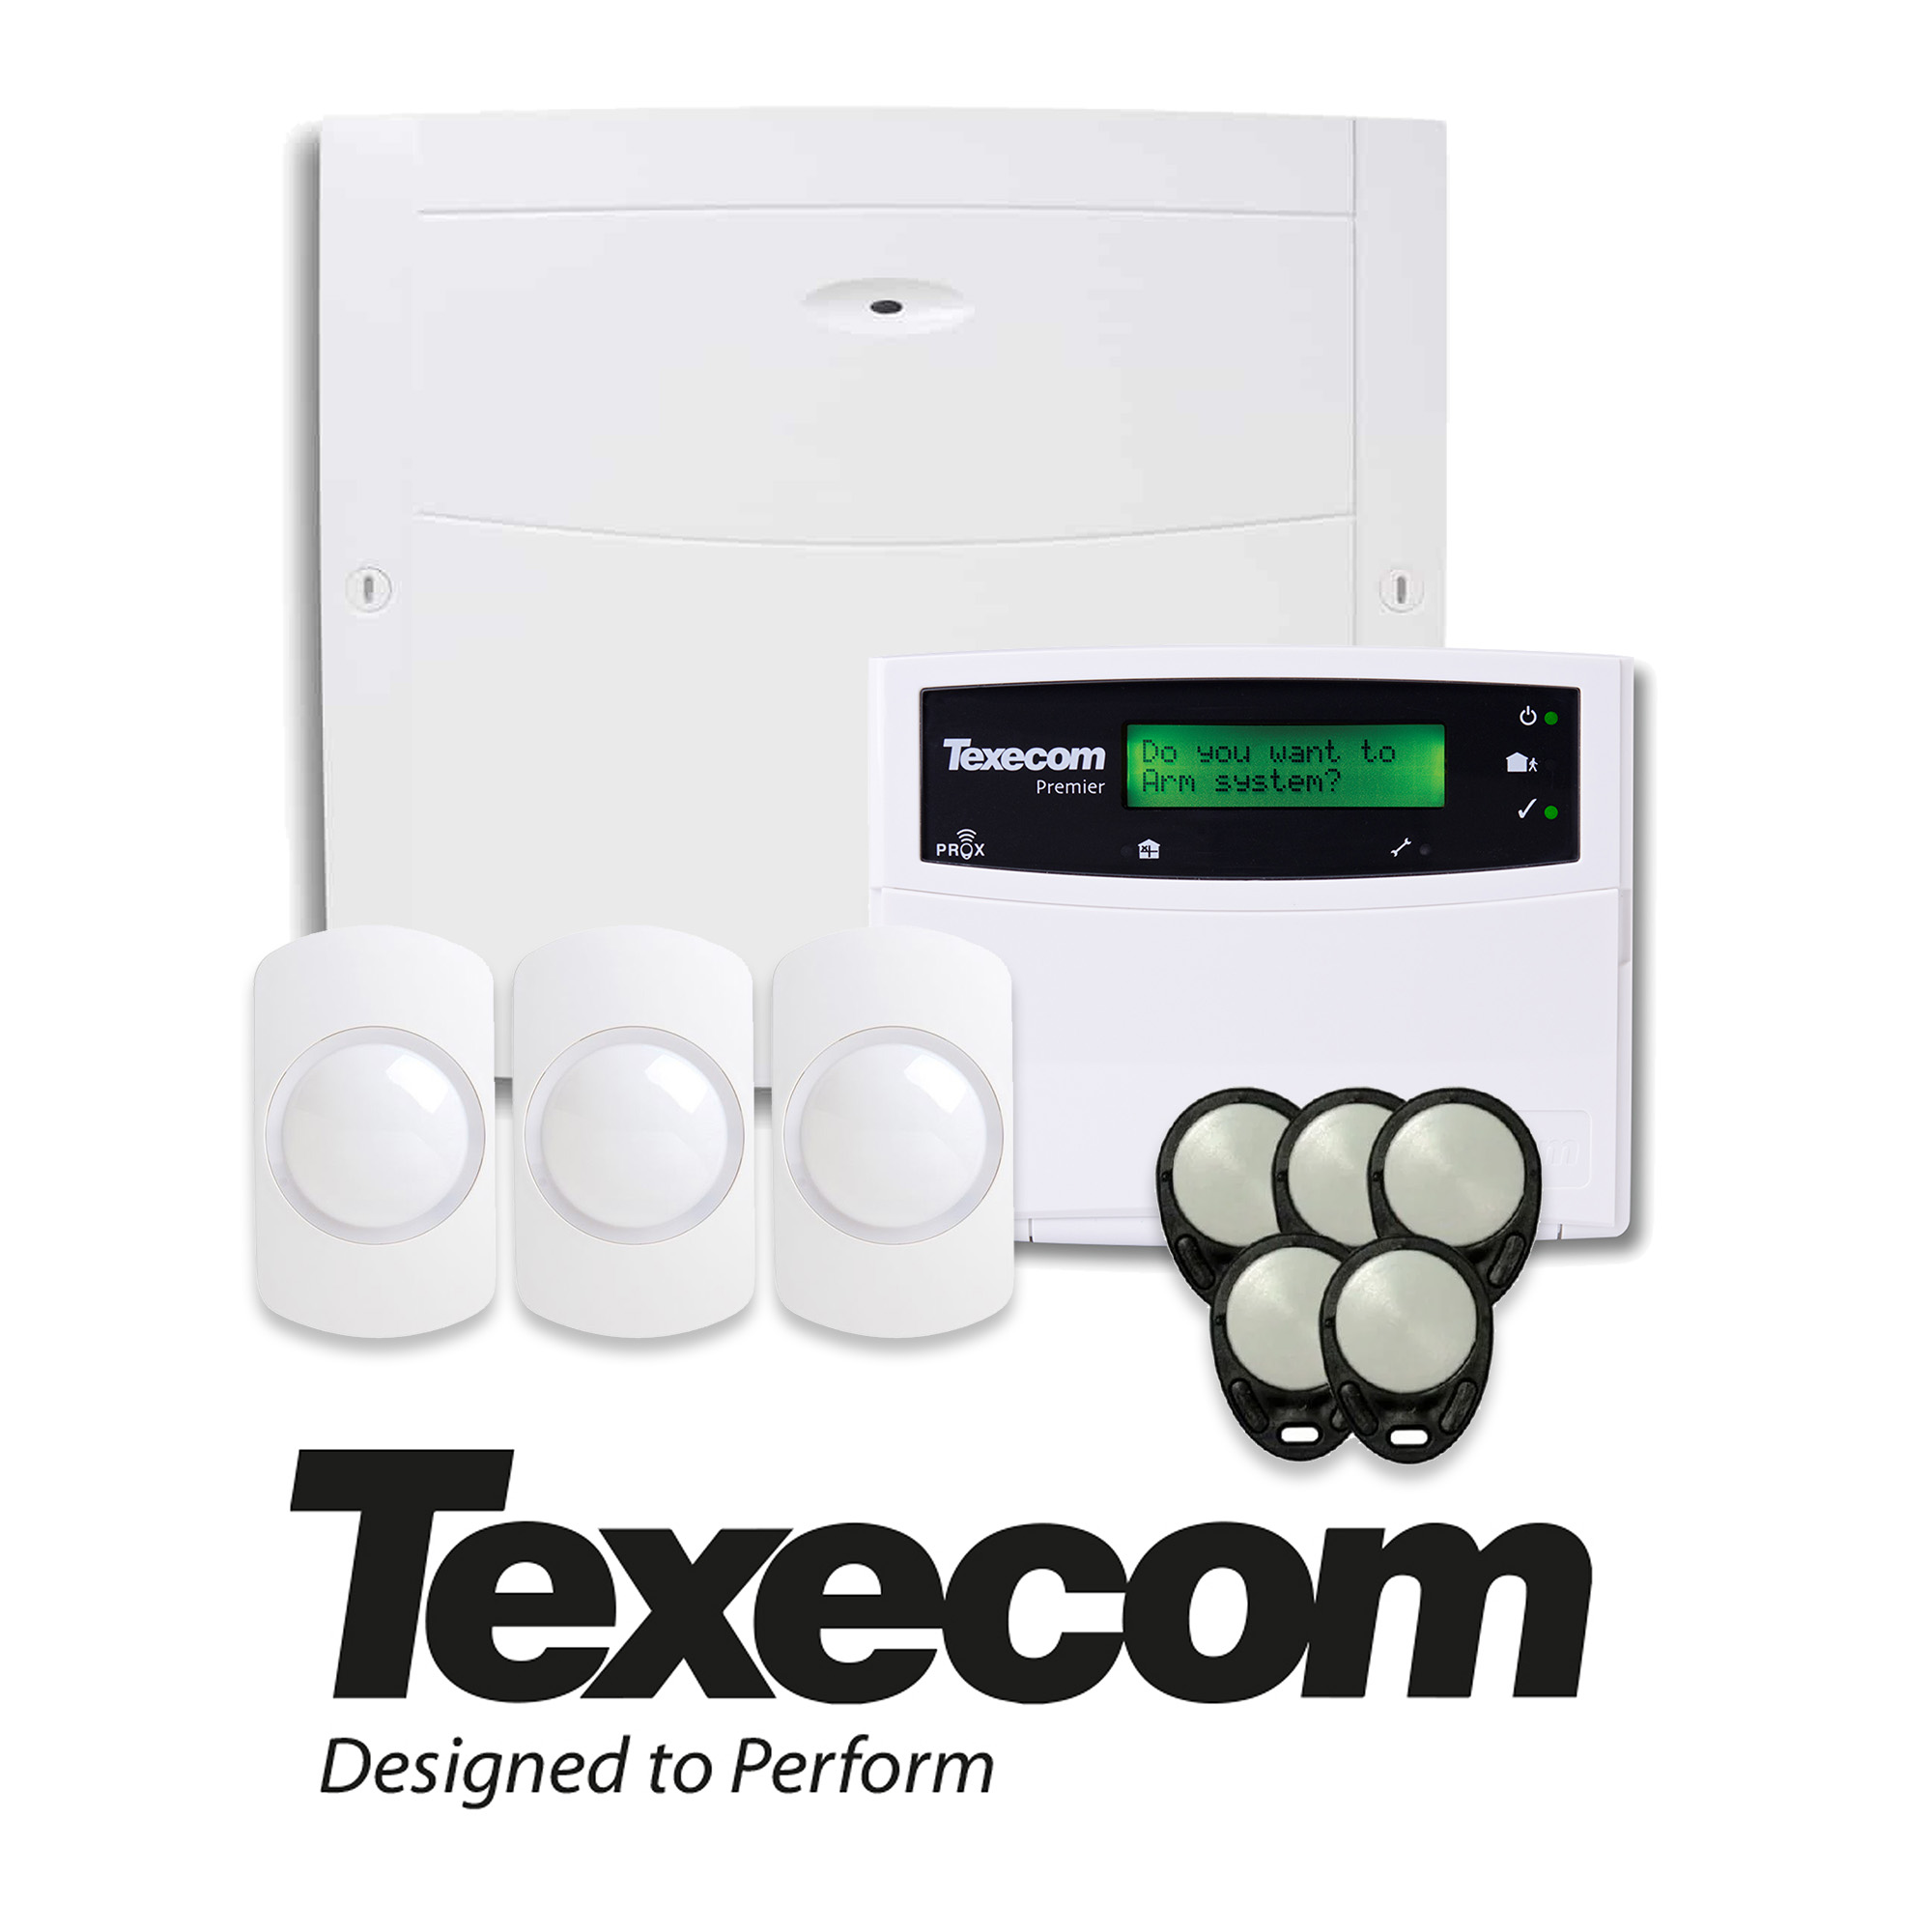 Texecom KIT-1040 Premier Elite Series, 24-Zone Alarm Control Panel Kit